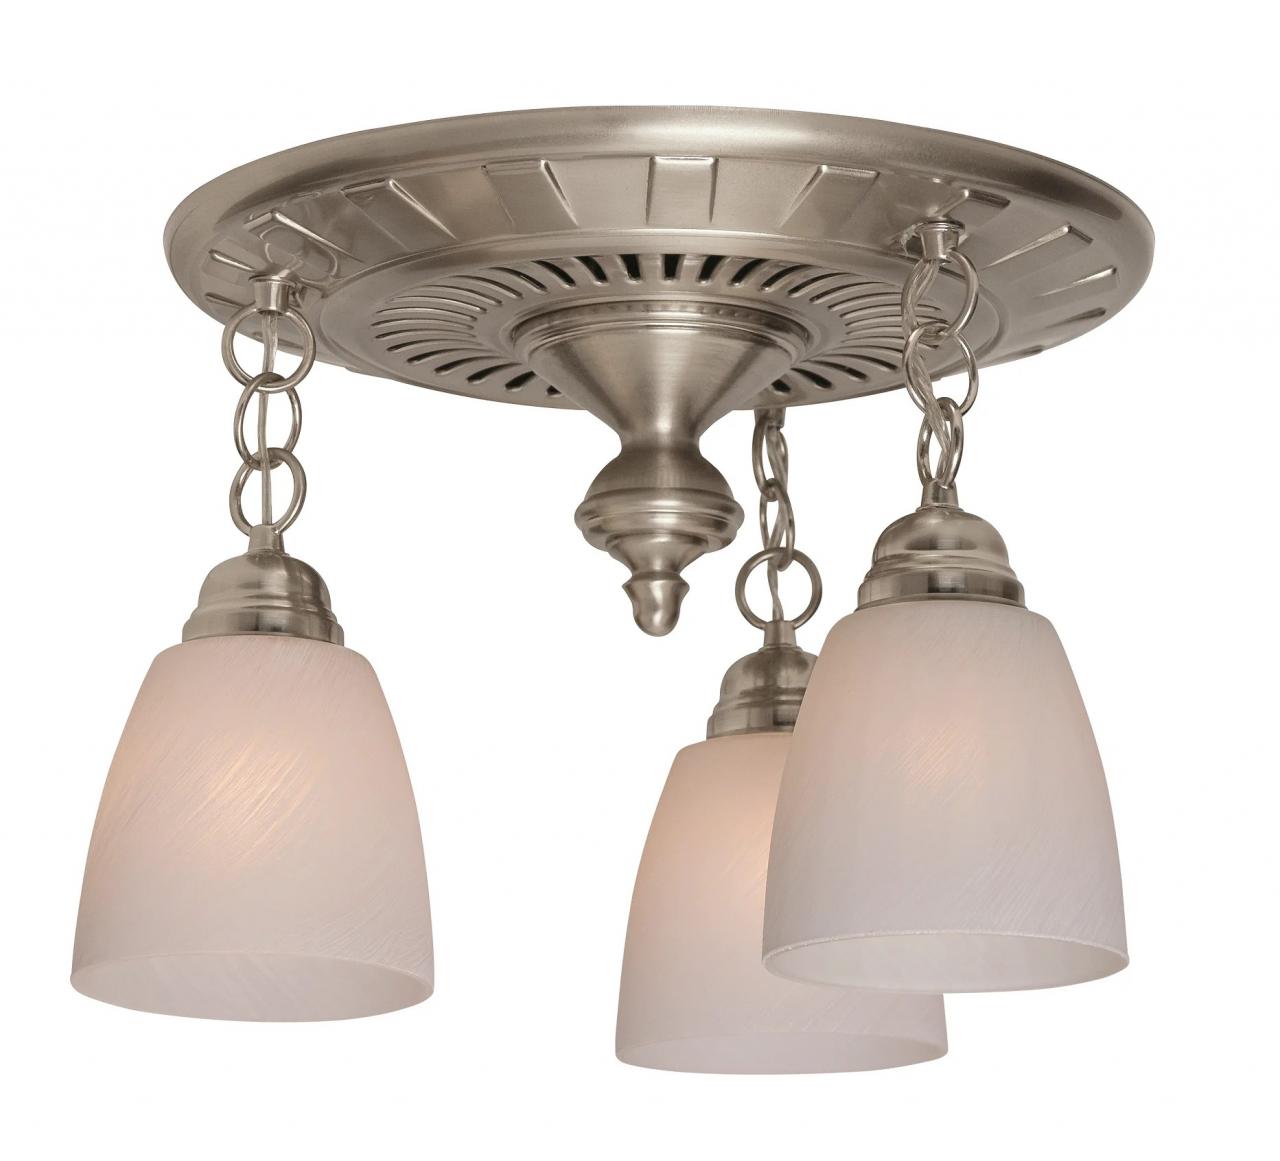 Decorative Bathroom Ceiling Fan Light Broan 761bn Brushed Nickel